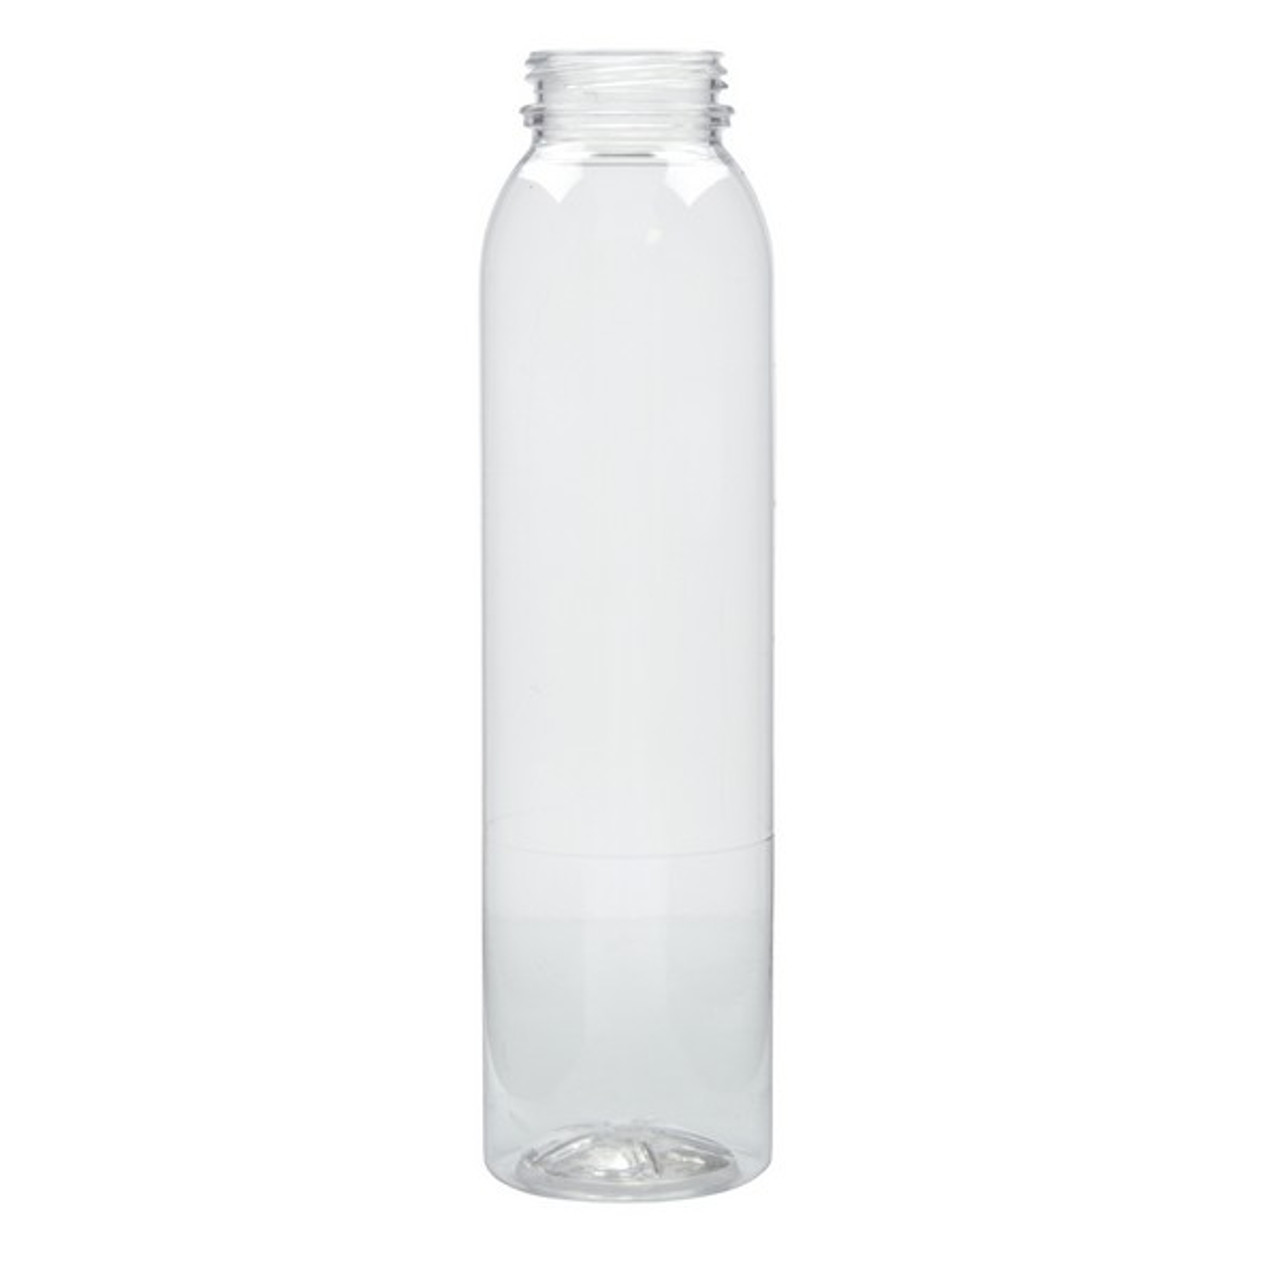 12 oz Clear PET Plastic Water Bottles